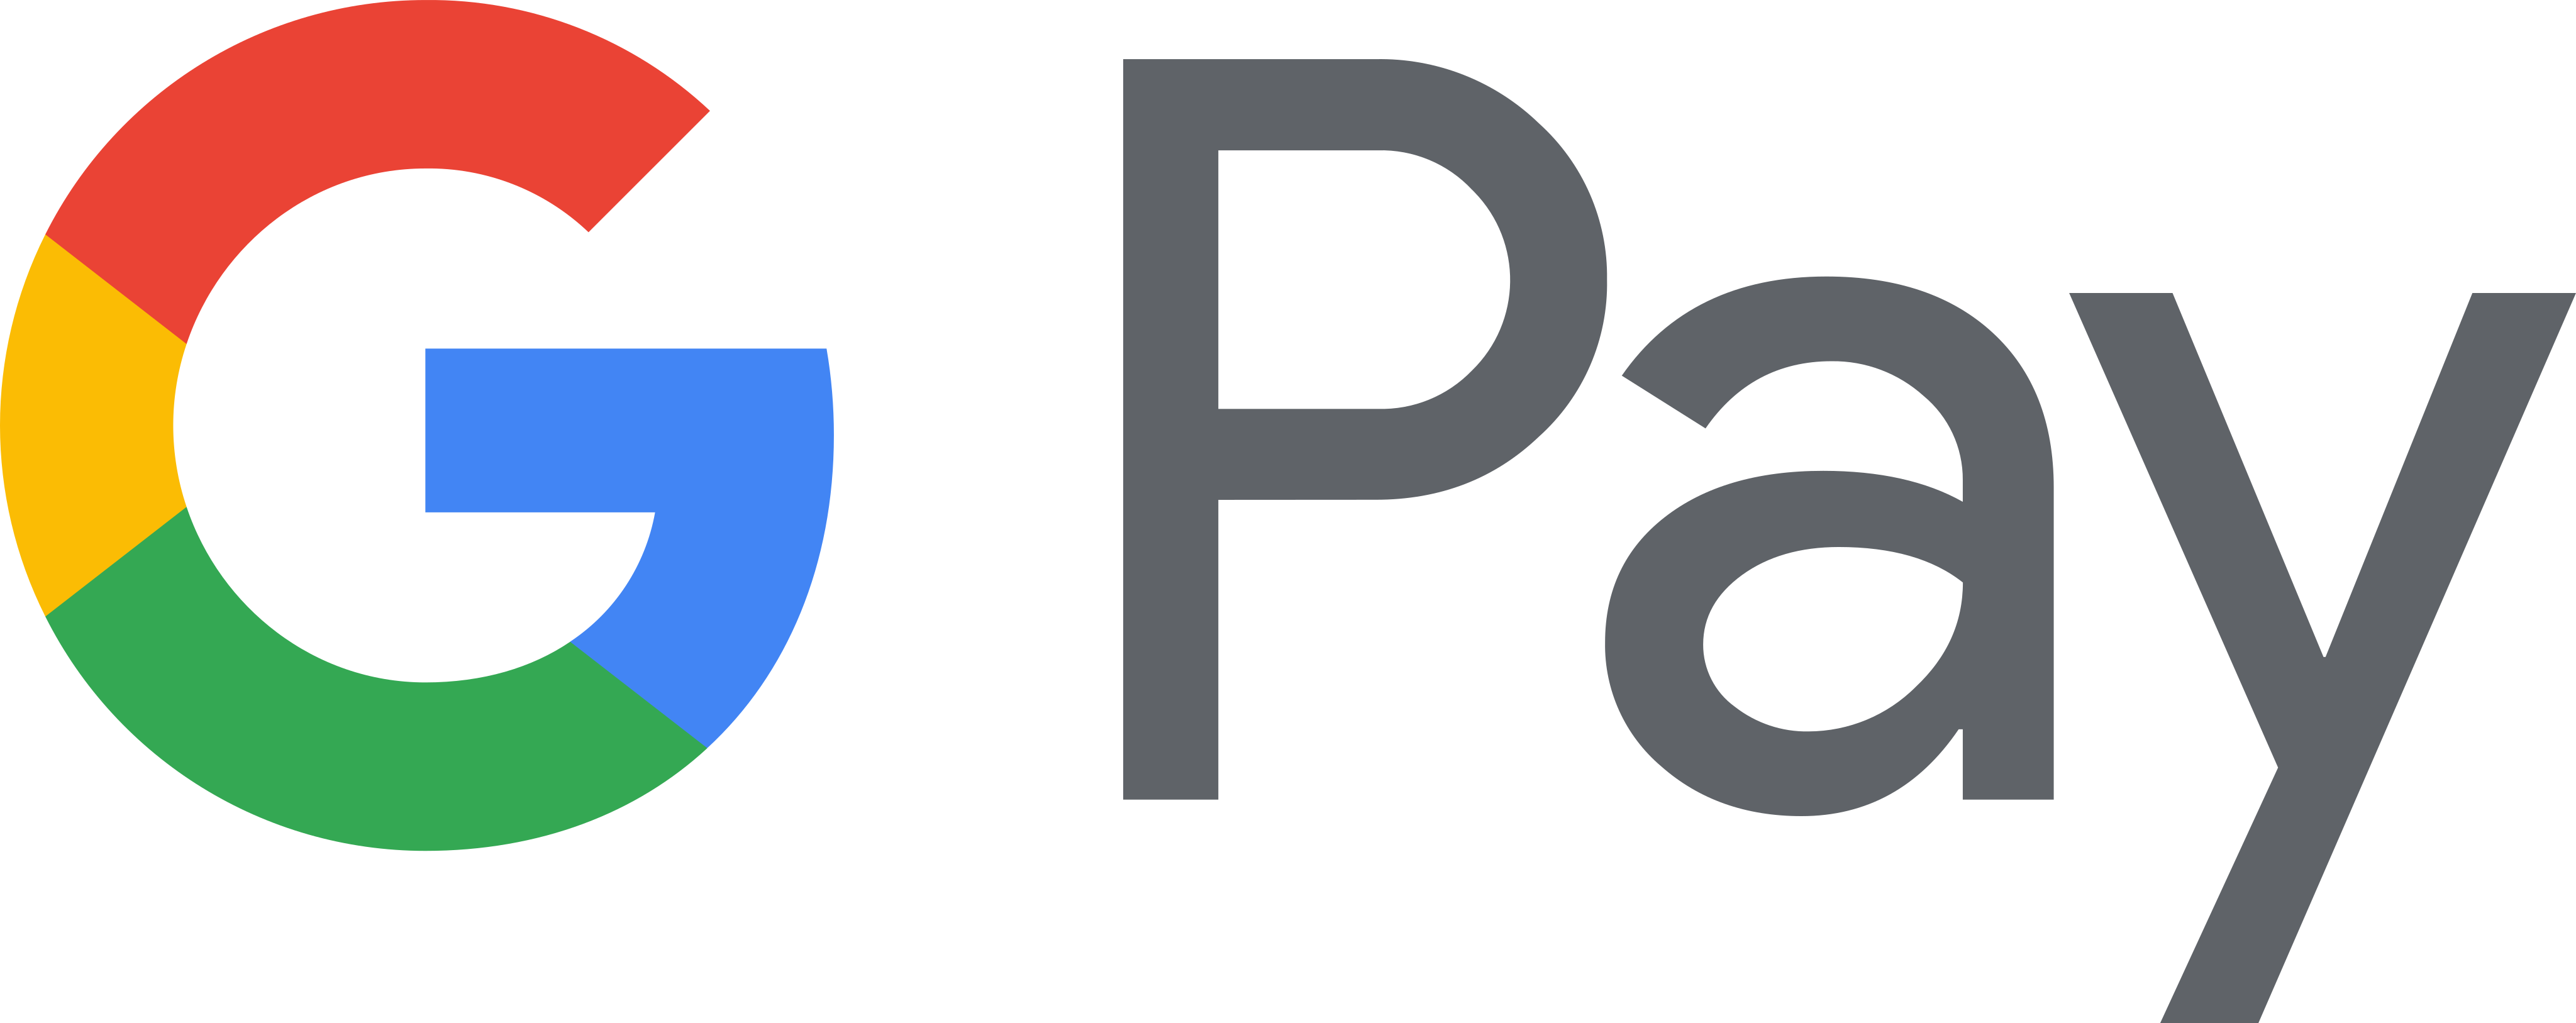 google pay logo - Google Pay Logo